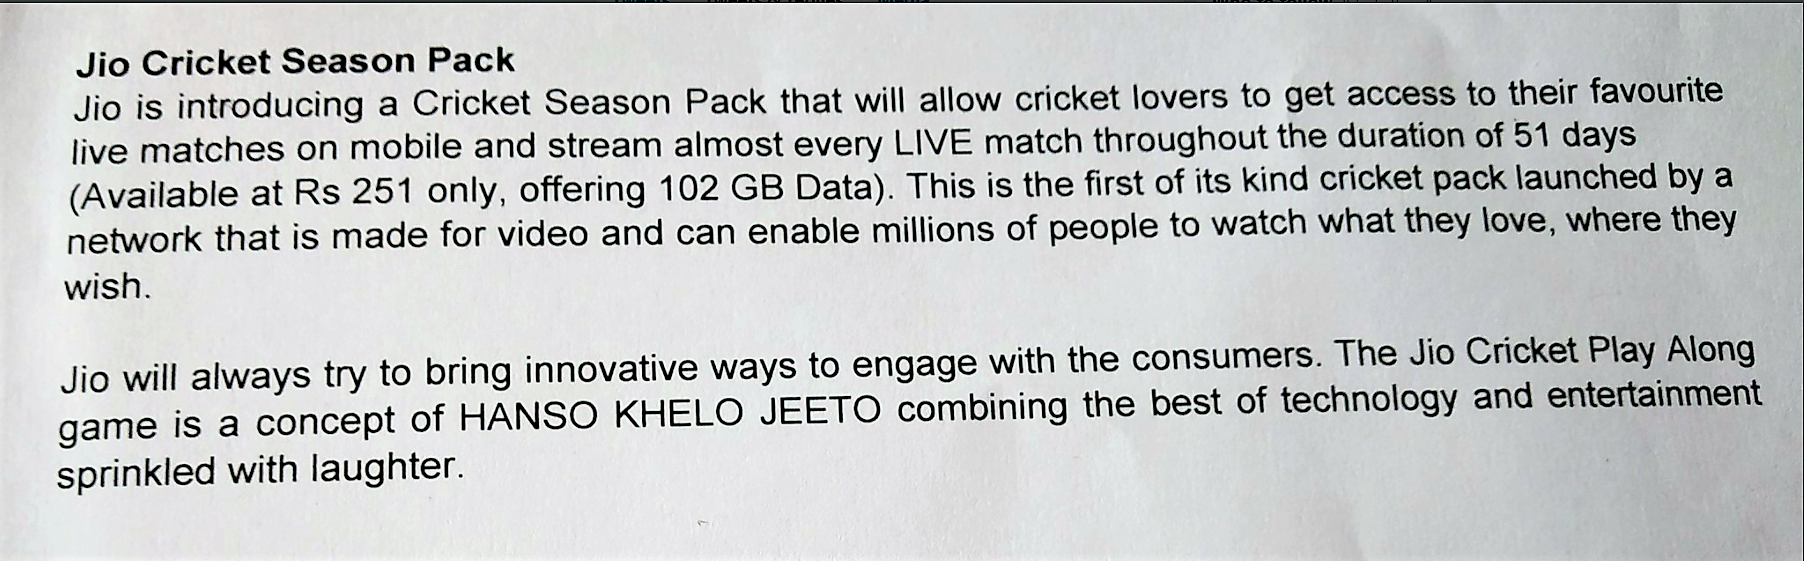 jio cricket season pack